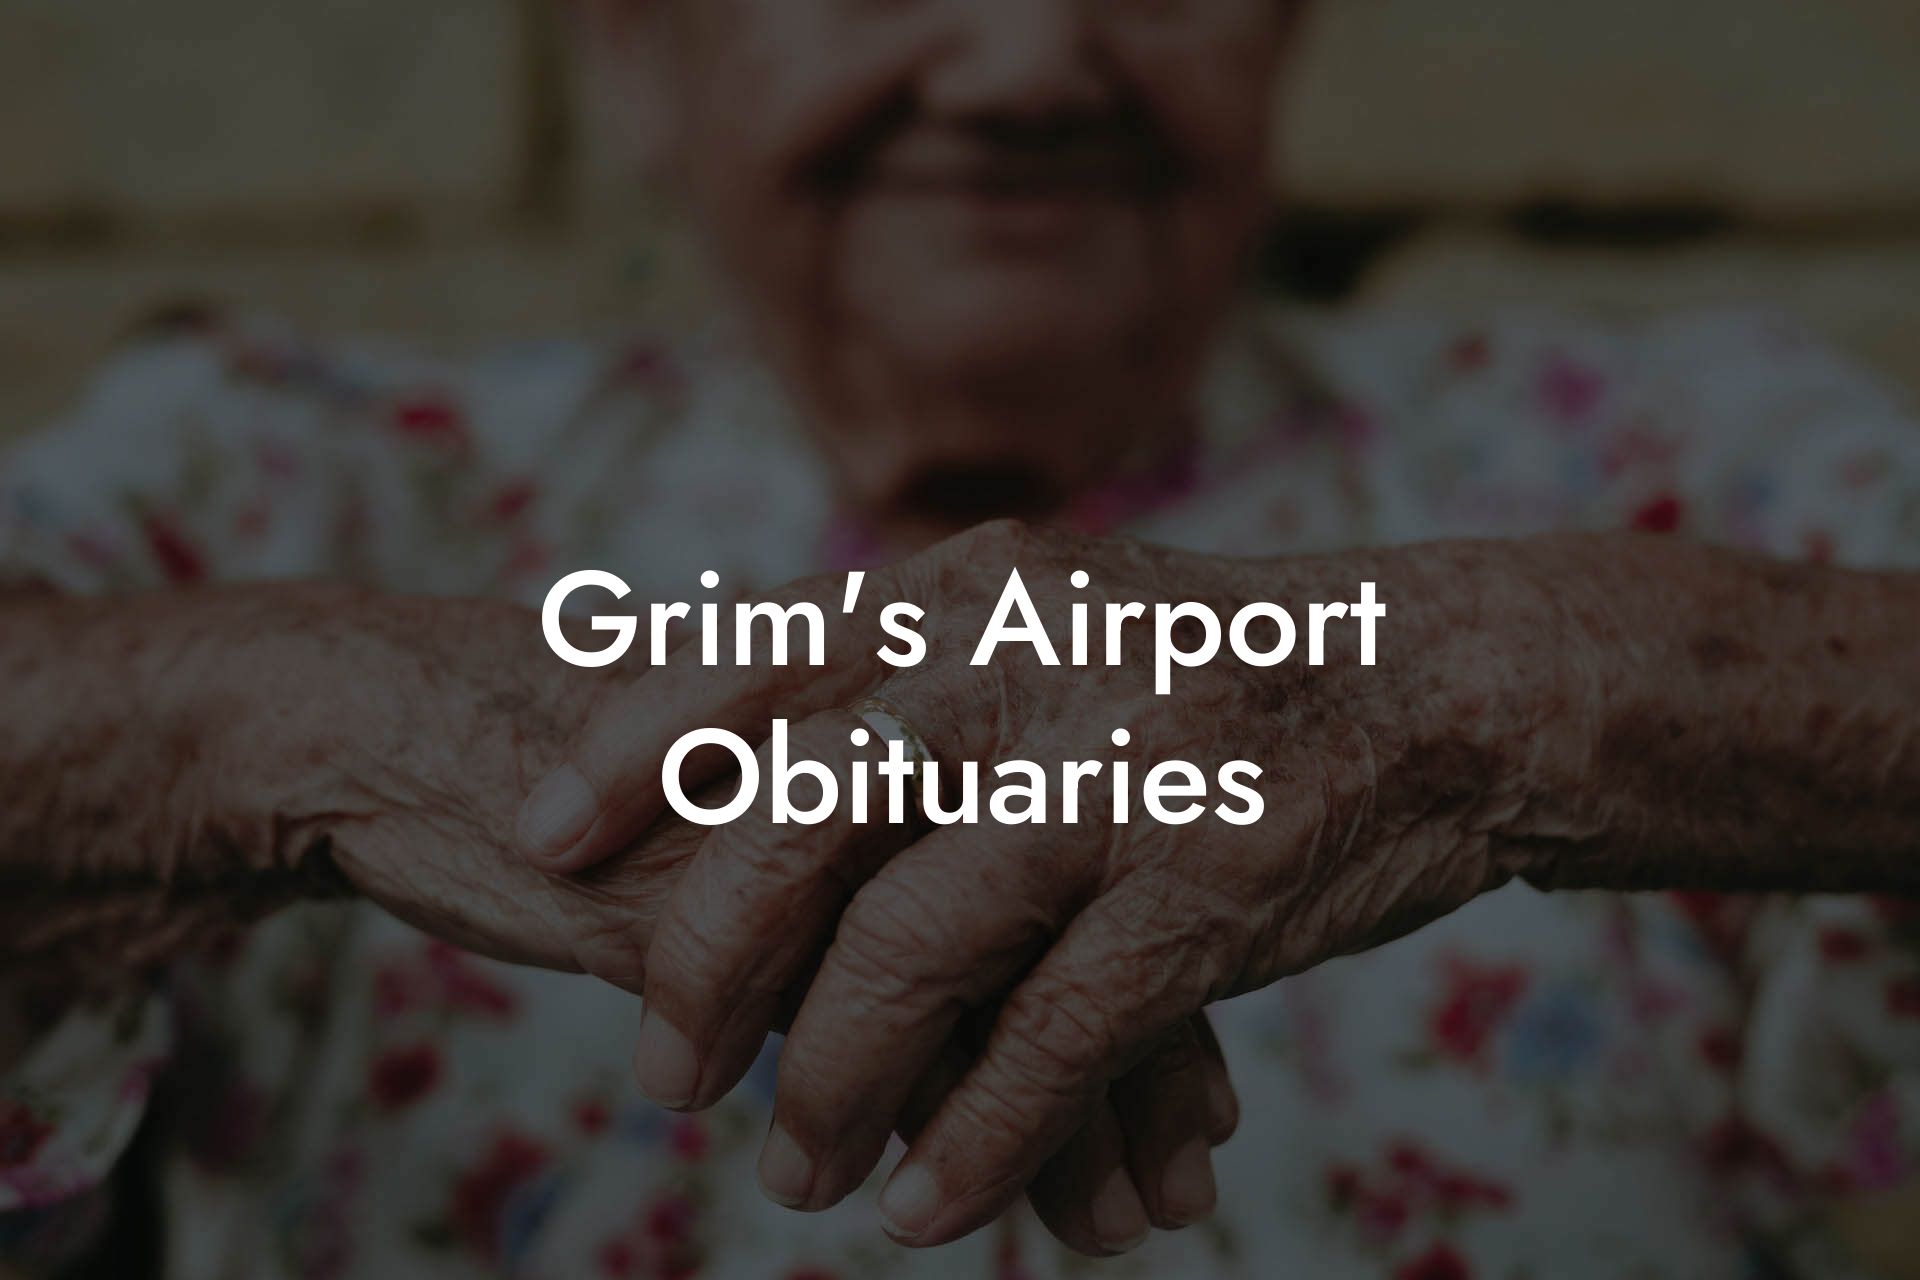 Grim's Airport Obituaries